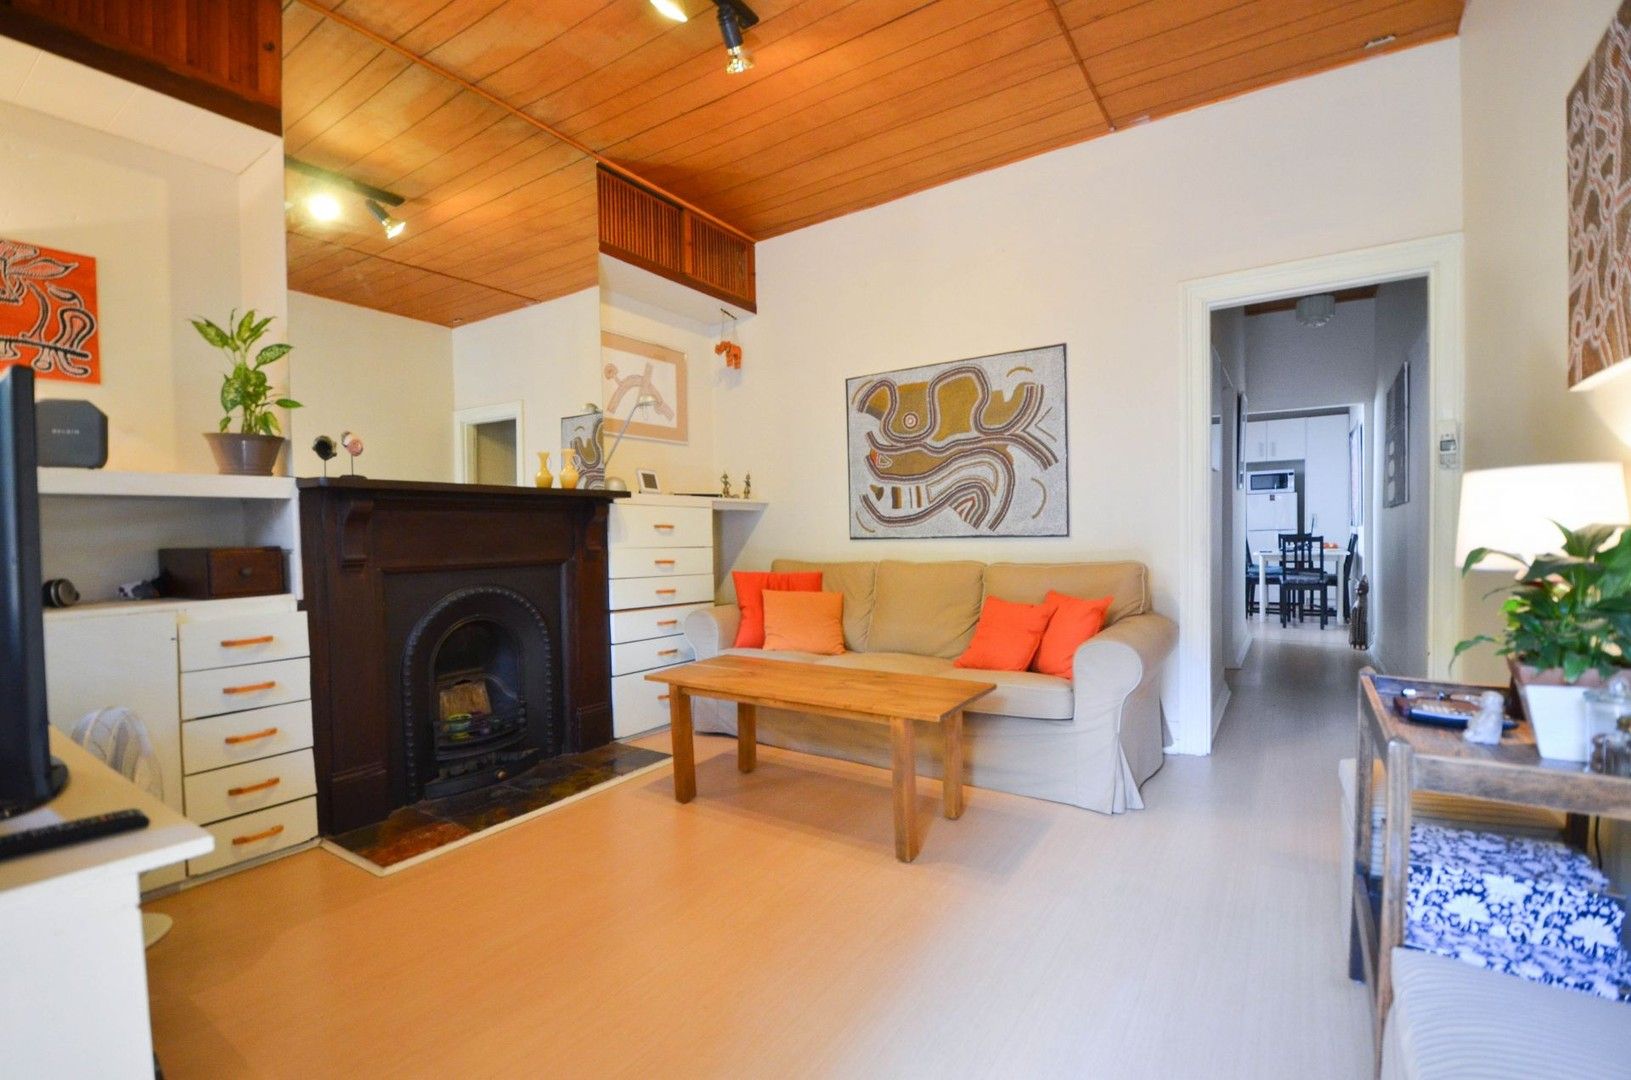 1 bedrooms House in 434 Botany Road ALEXANDRIA NSW, 2015